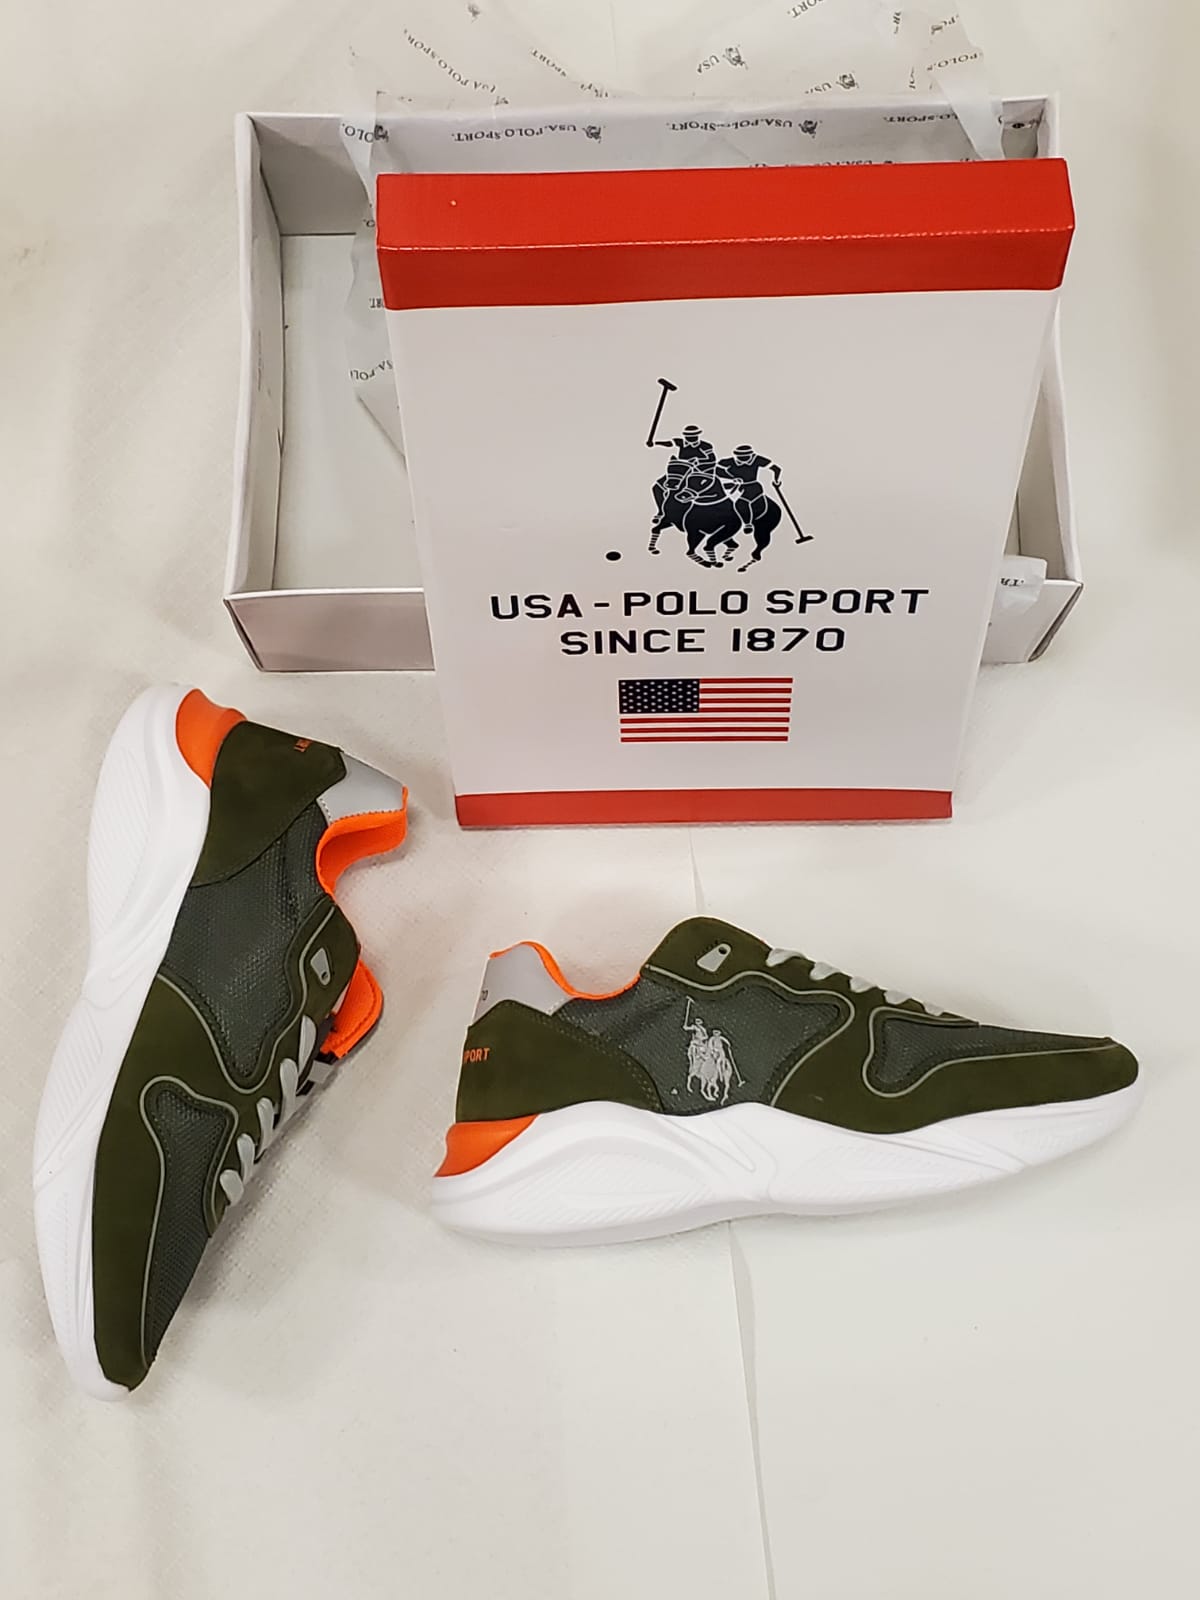 Sport since. USA Polo обувь. USA Polo обувь 2020.